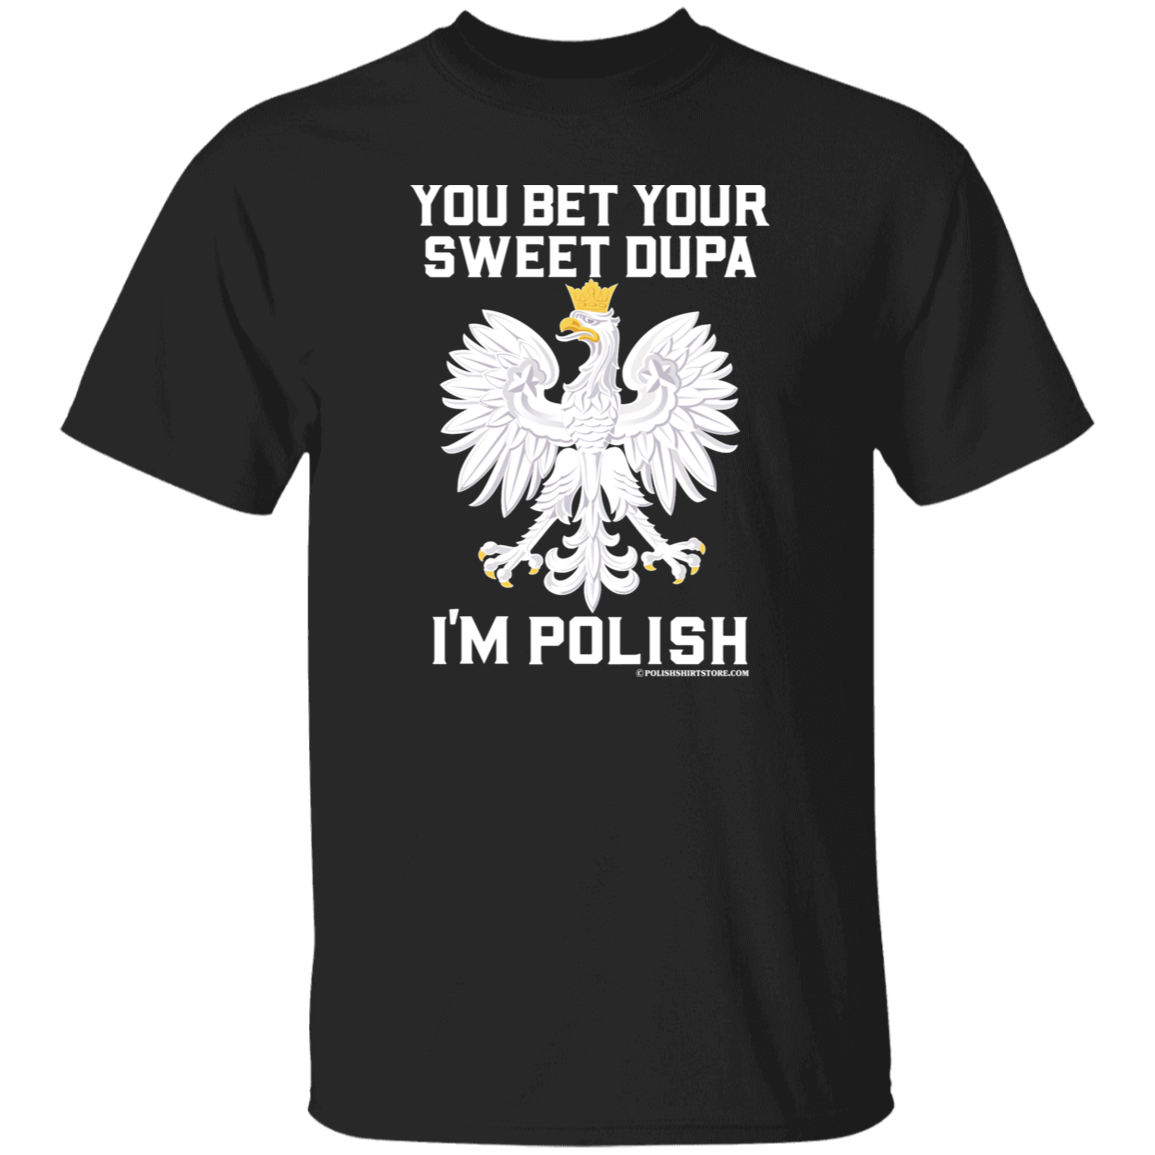 You Bet Your Sweet Dupa I'm Polish - New Apparel CustomCat G500 5.3 oz. T-Shirt Black S